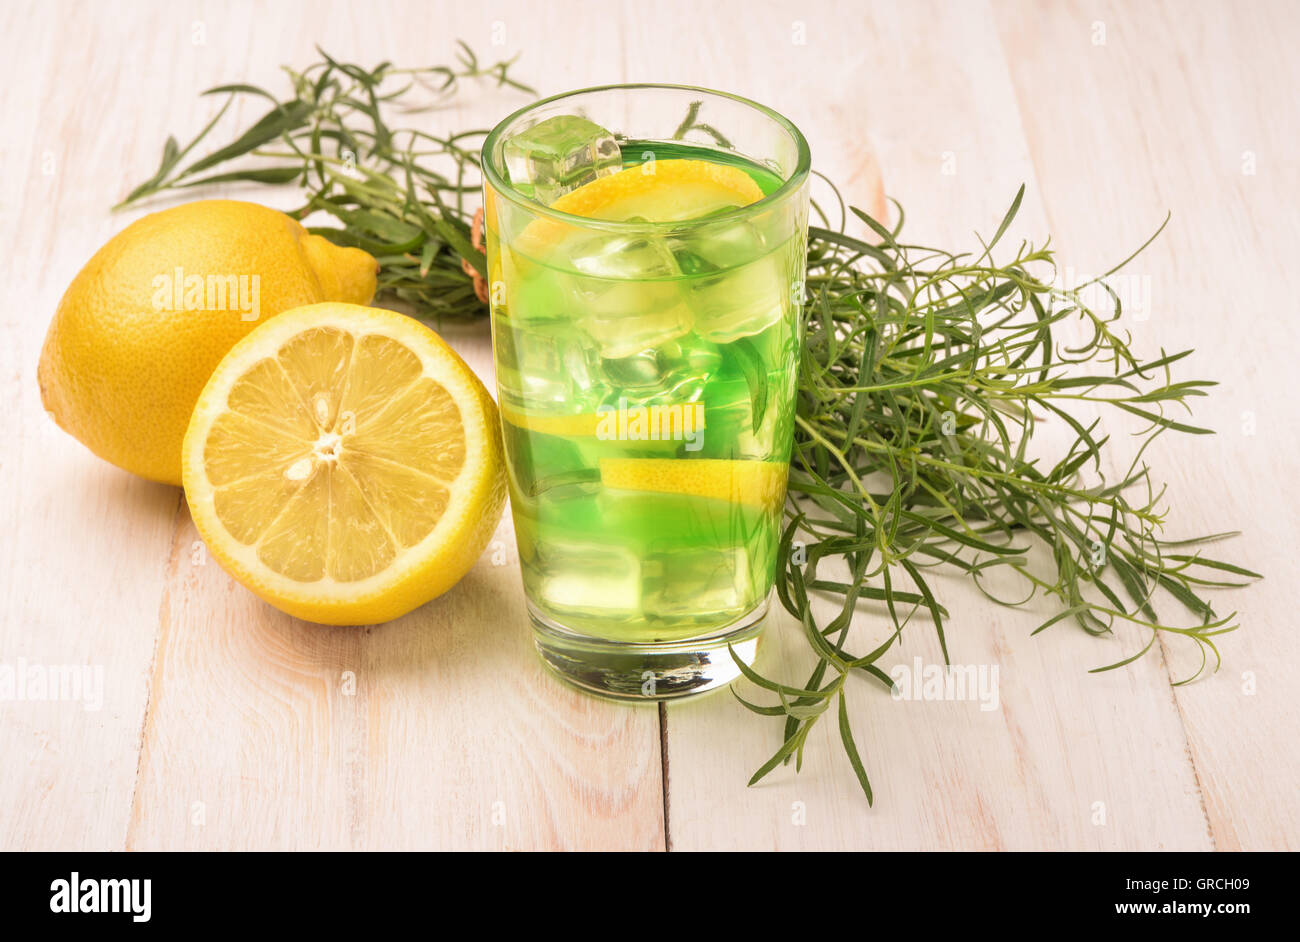 Glass of fresh homemade lemonade with tarragon and lemon on wooden table Stock Photo